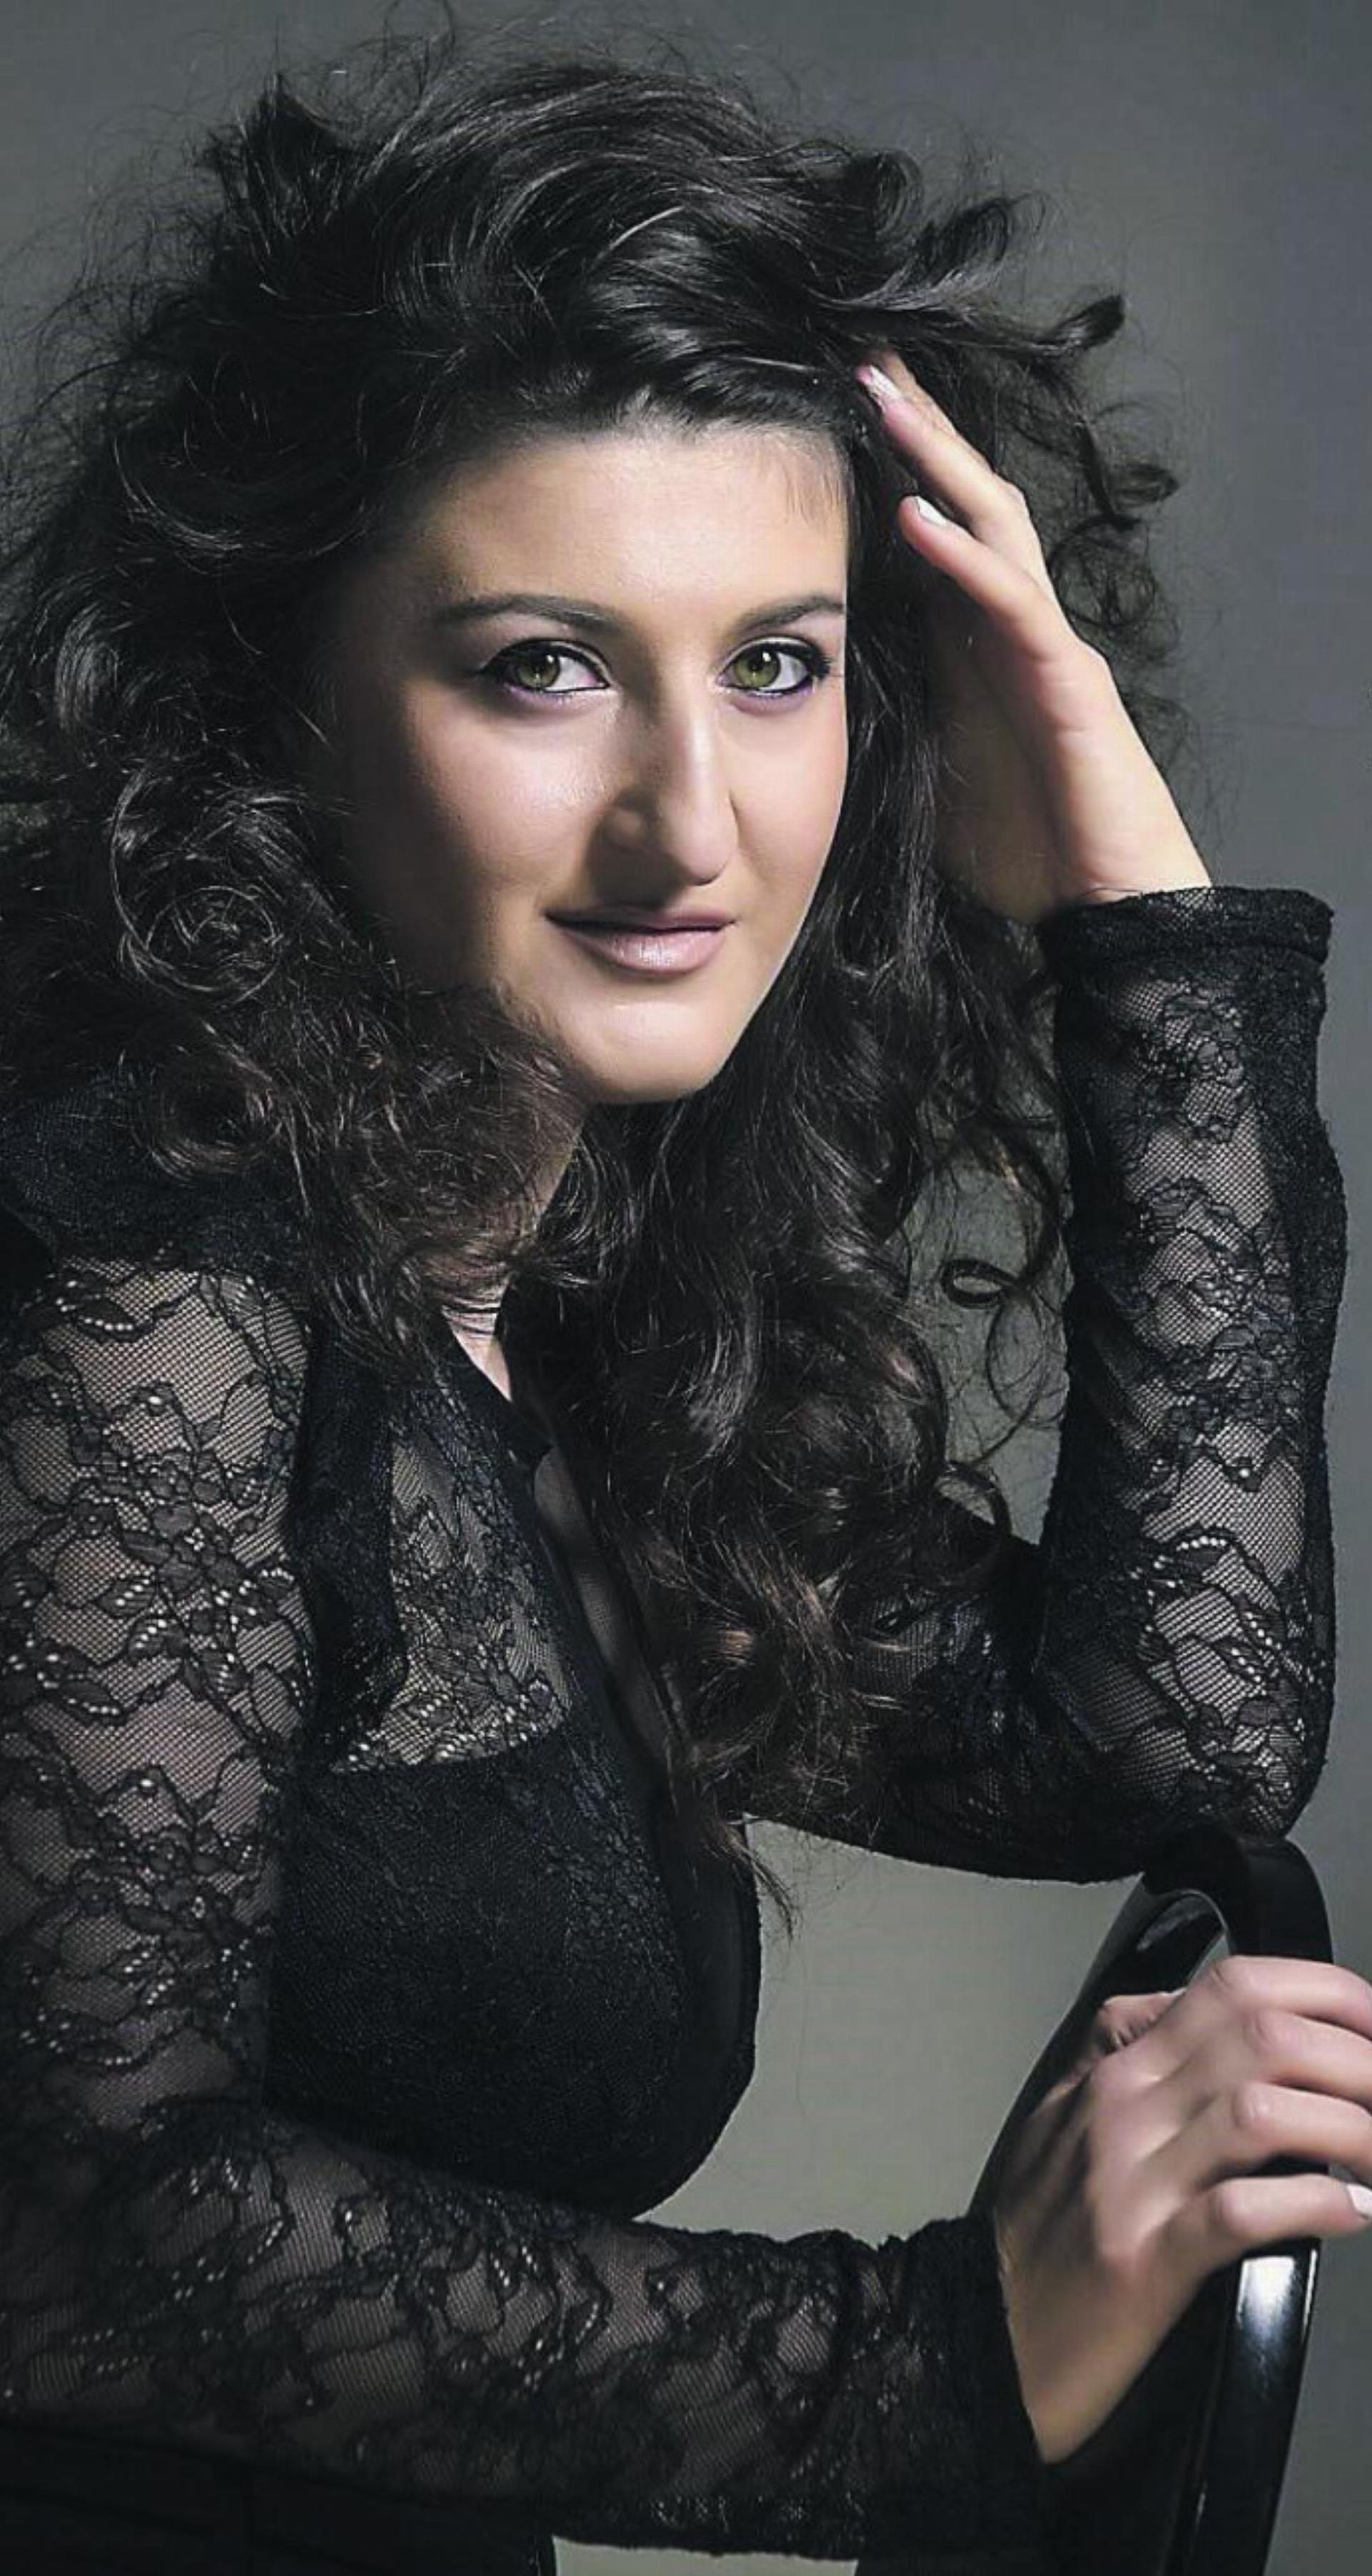 Sopranistin Maria Kublashvili. Bild: zvg